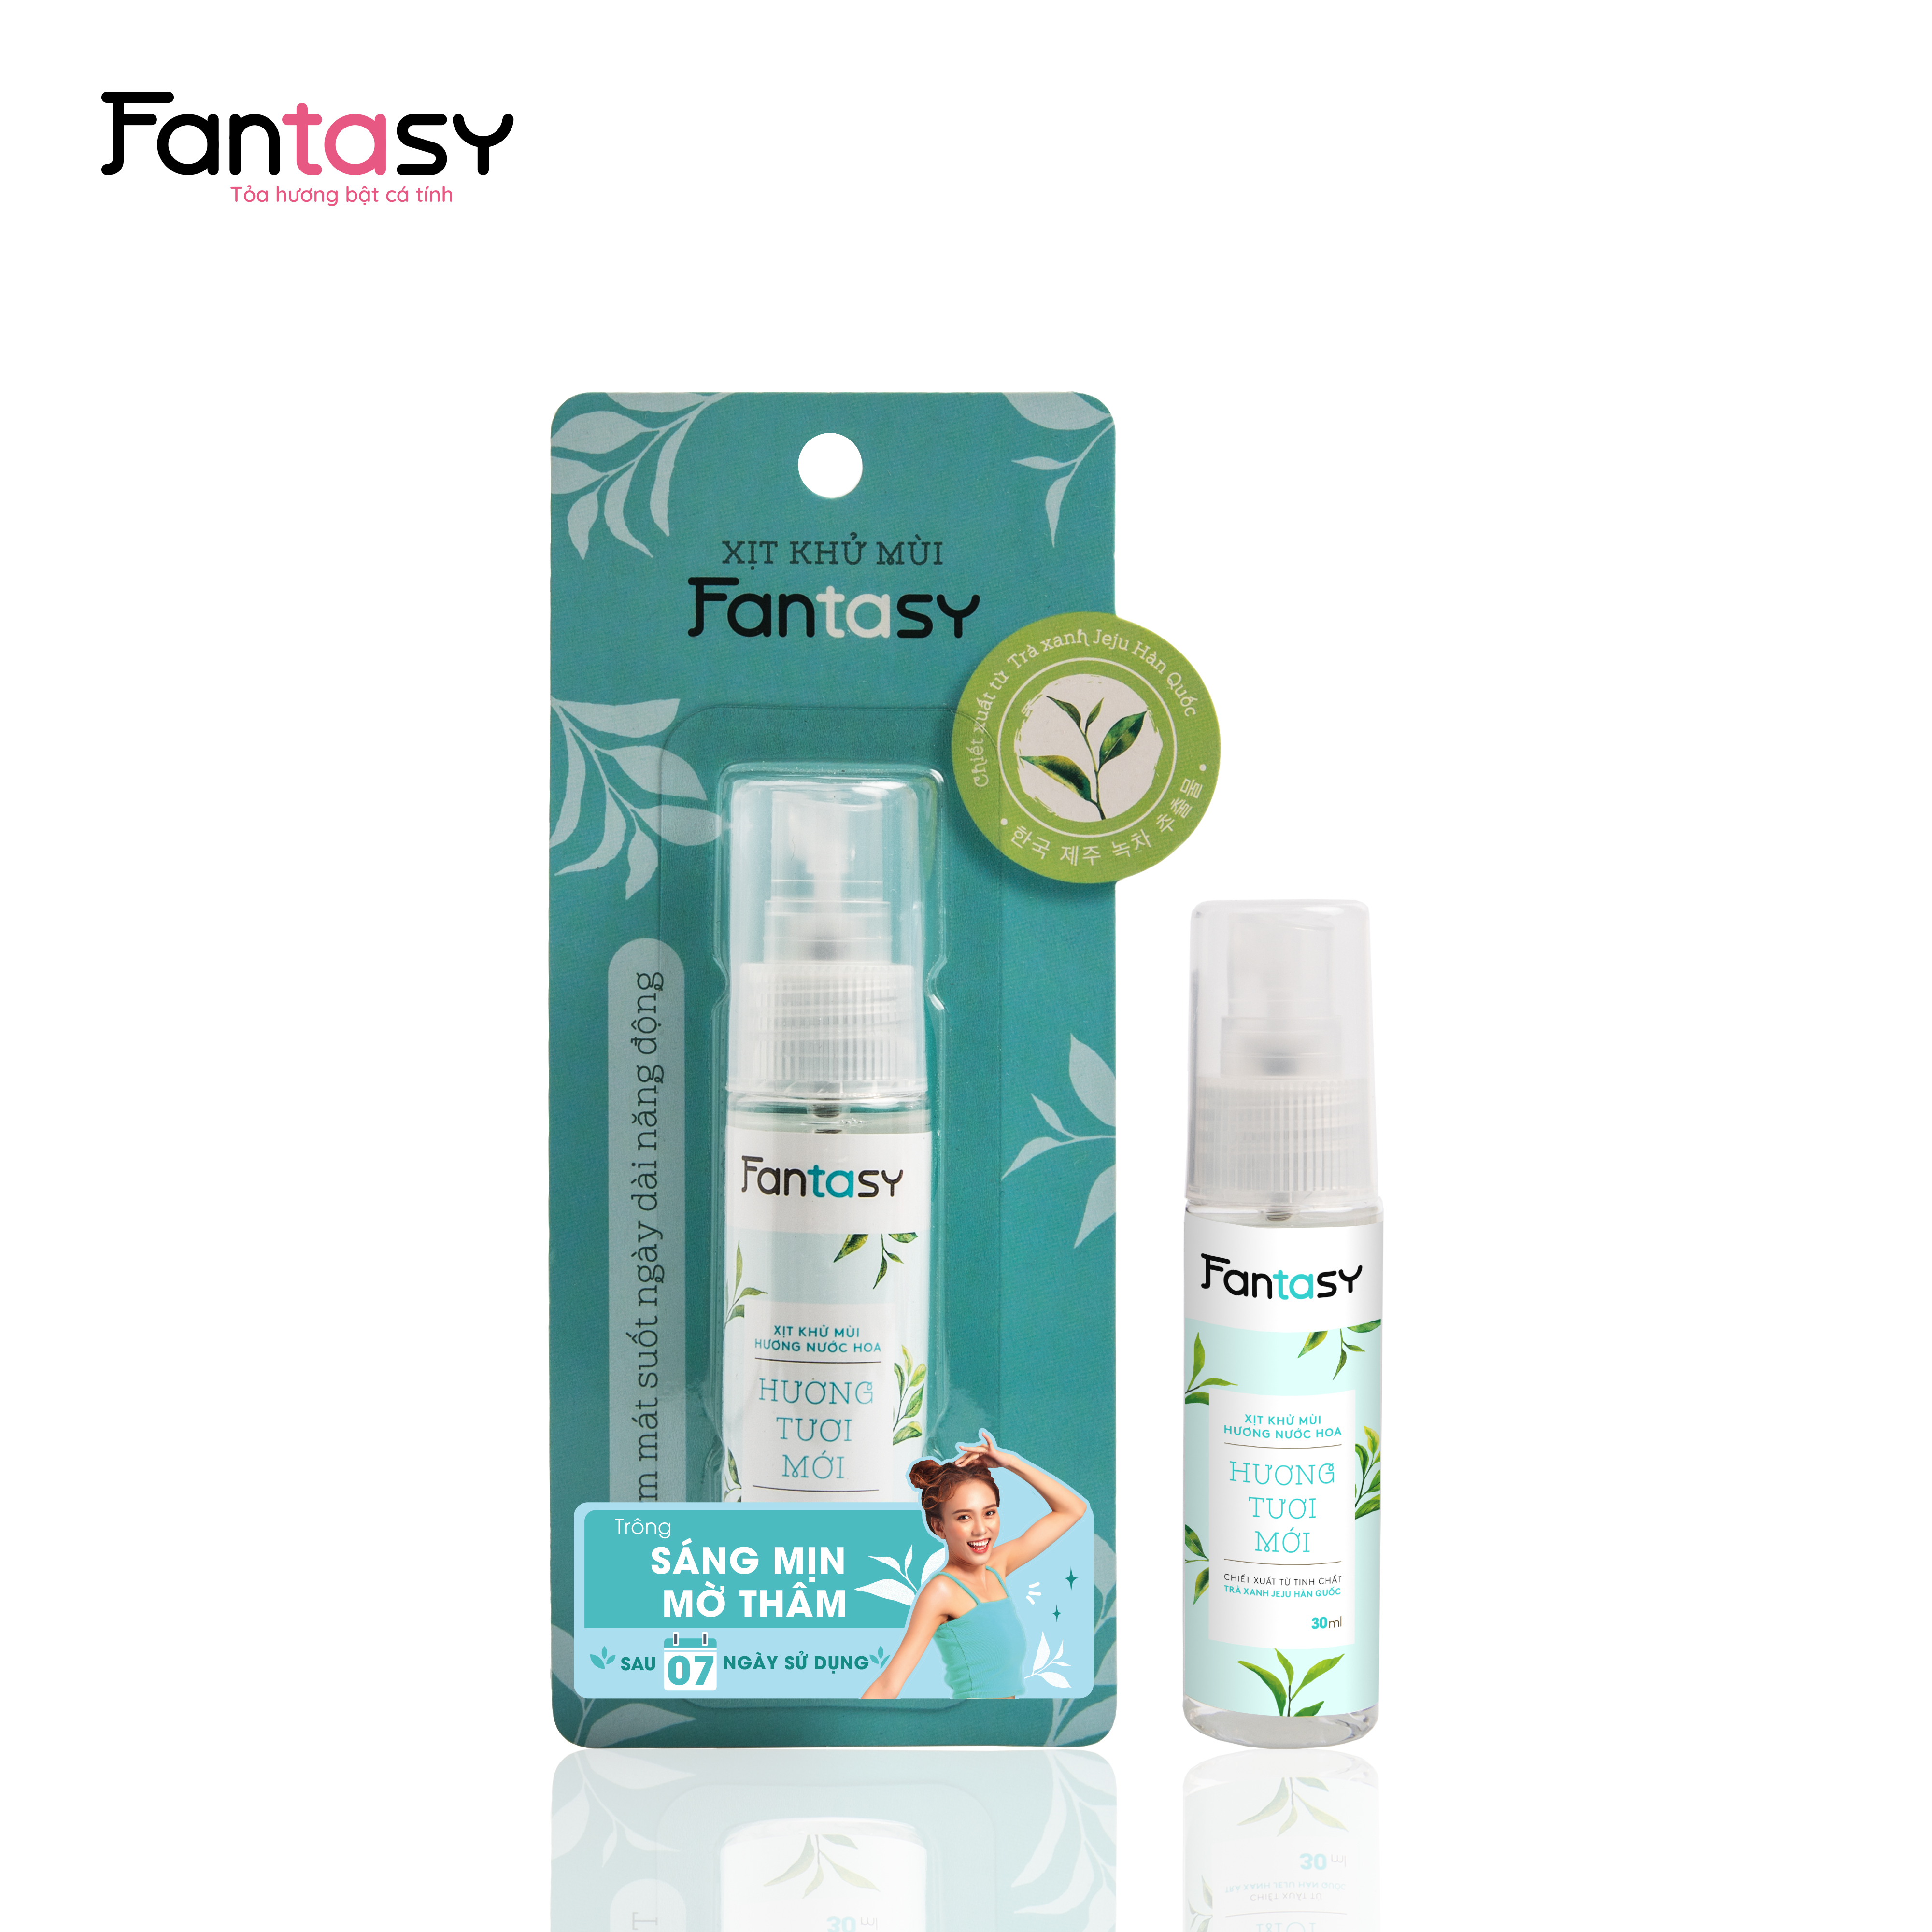 Fantasy perfumed deodorant spray - Fresh